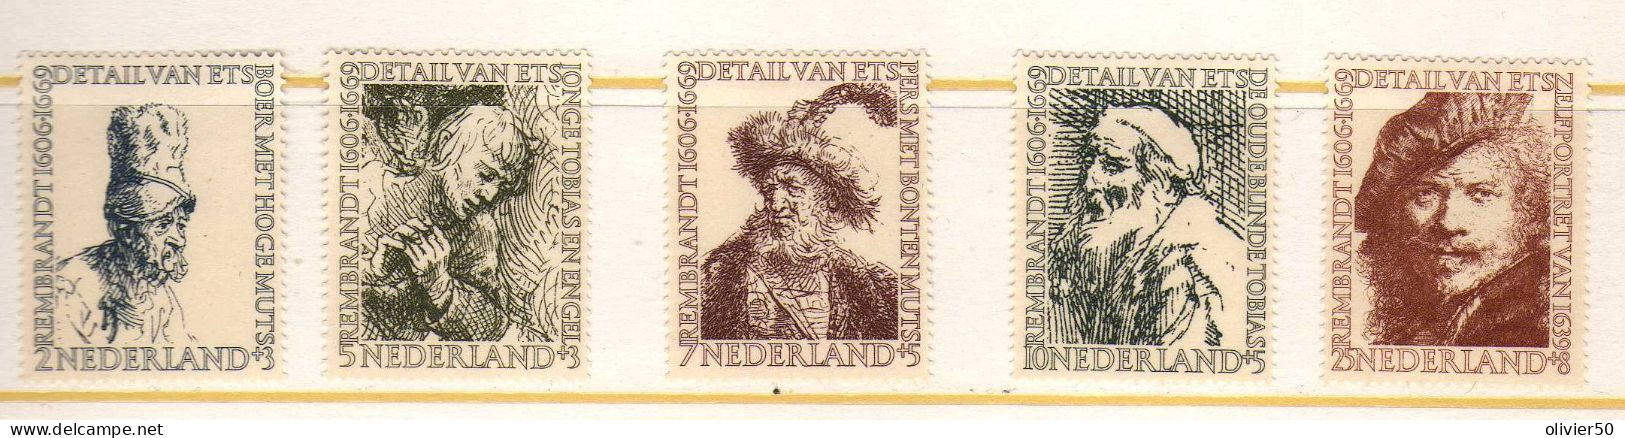 Pays-Bas -1956 - Rembrandt -  Neufs* - MLH - Nuovi